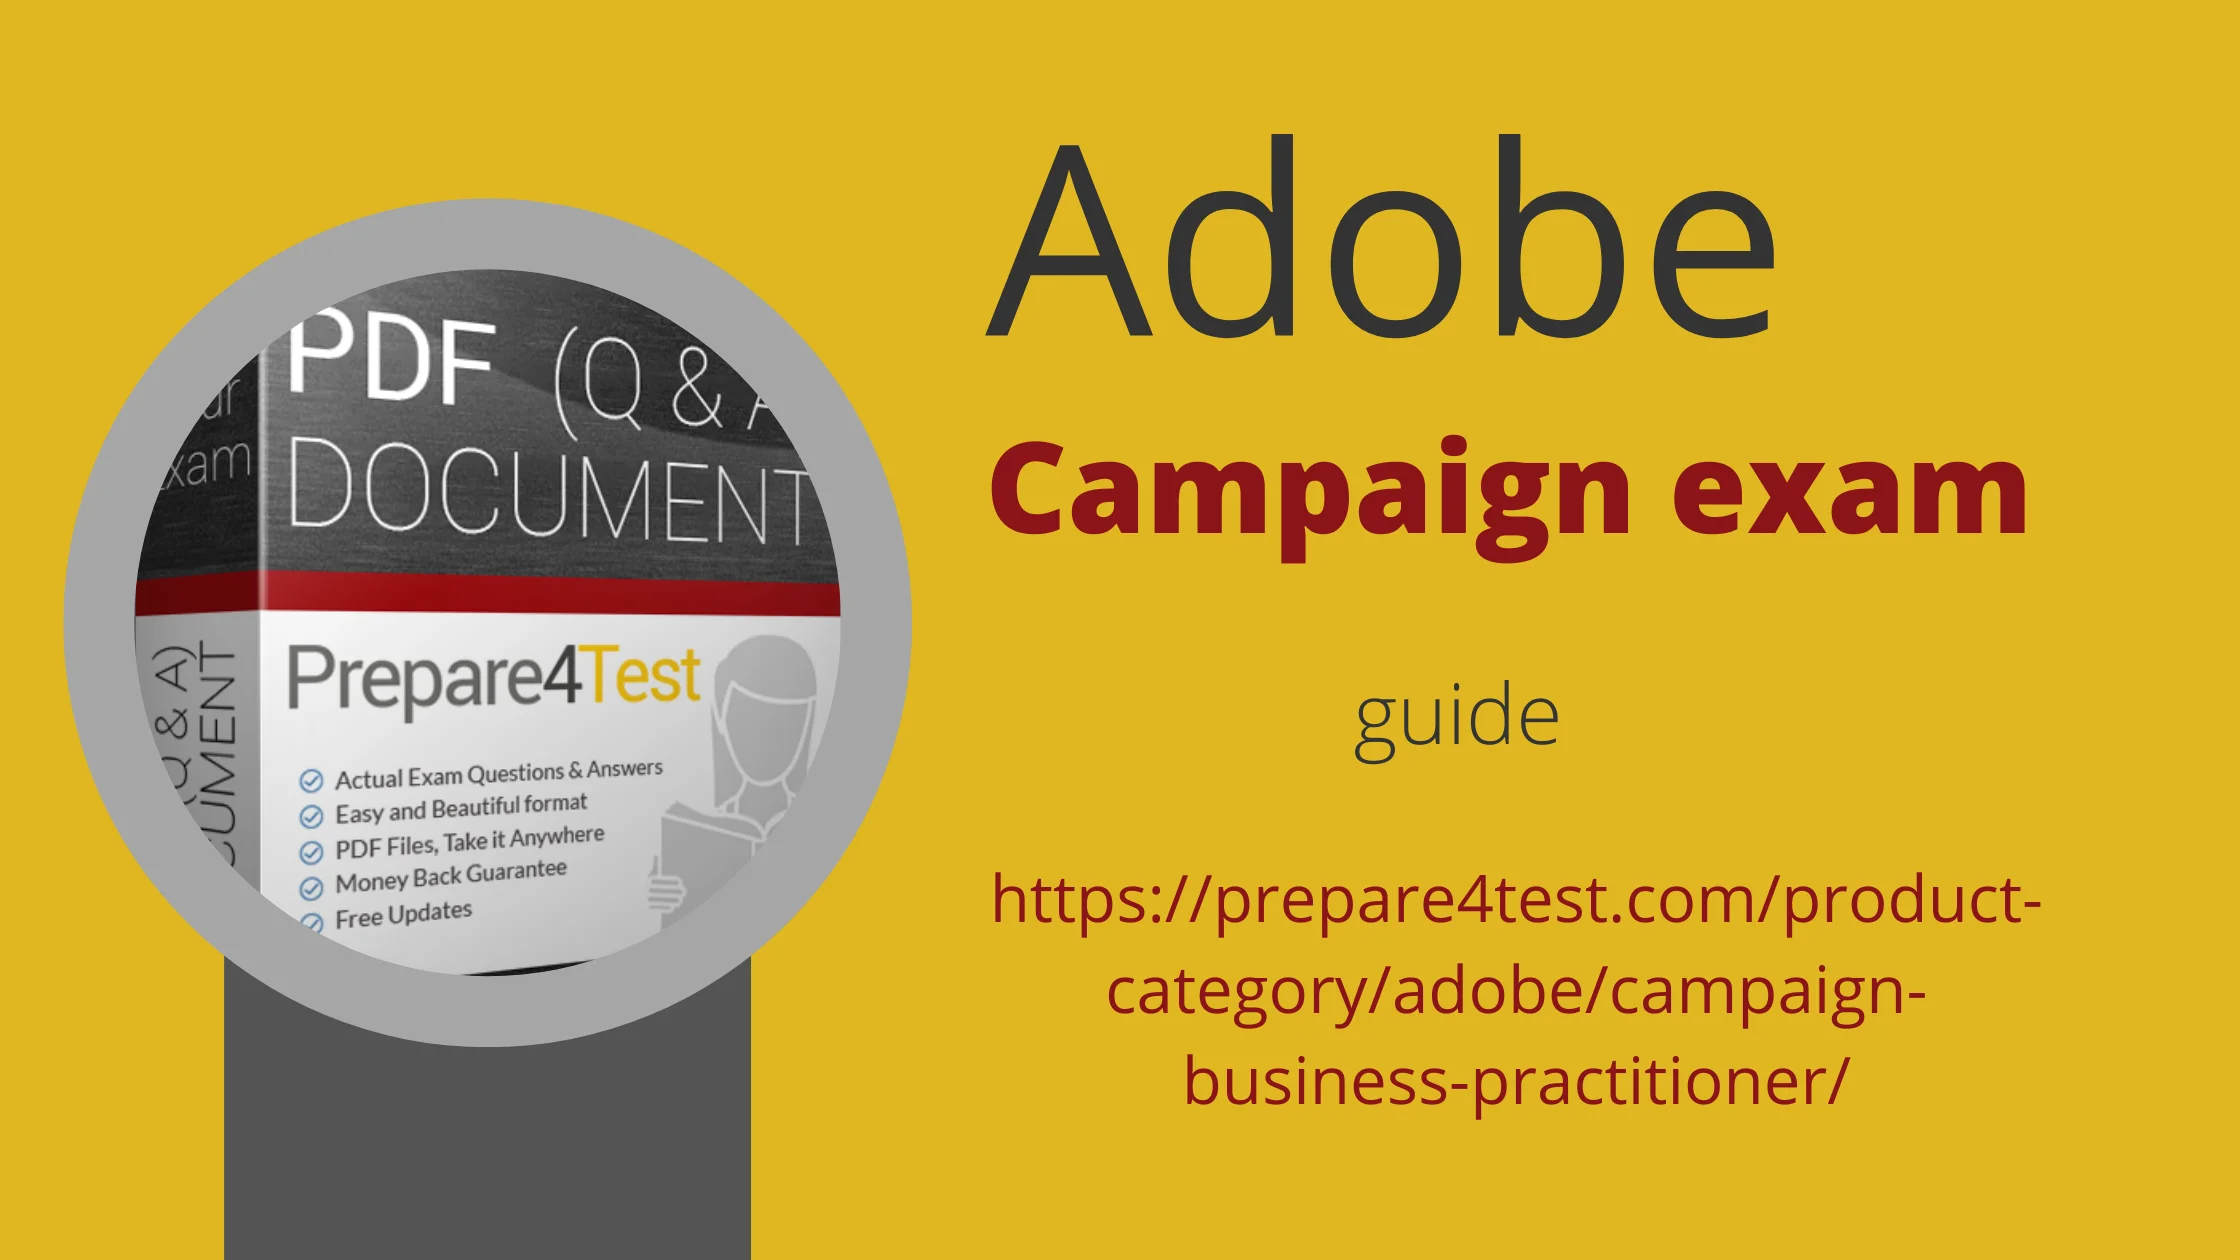 Adobe Campaign exam guide